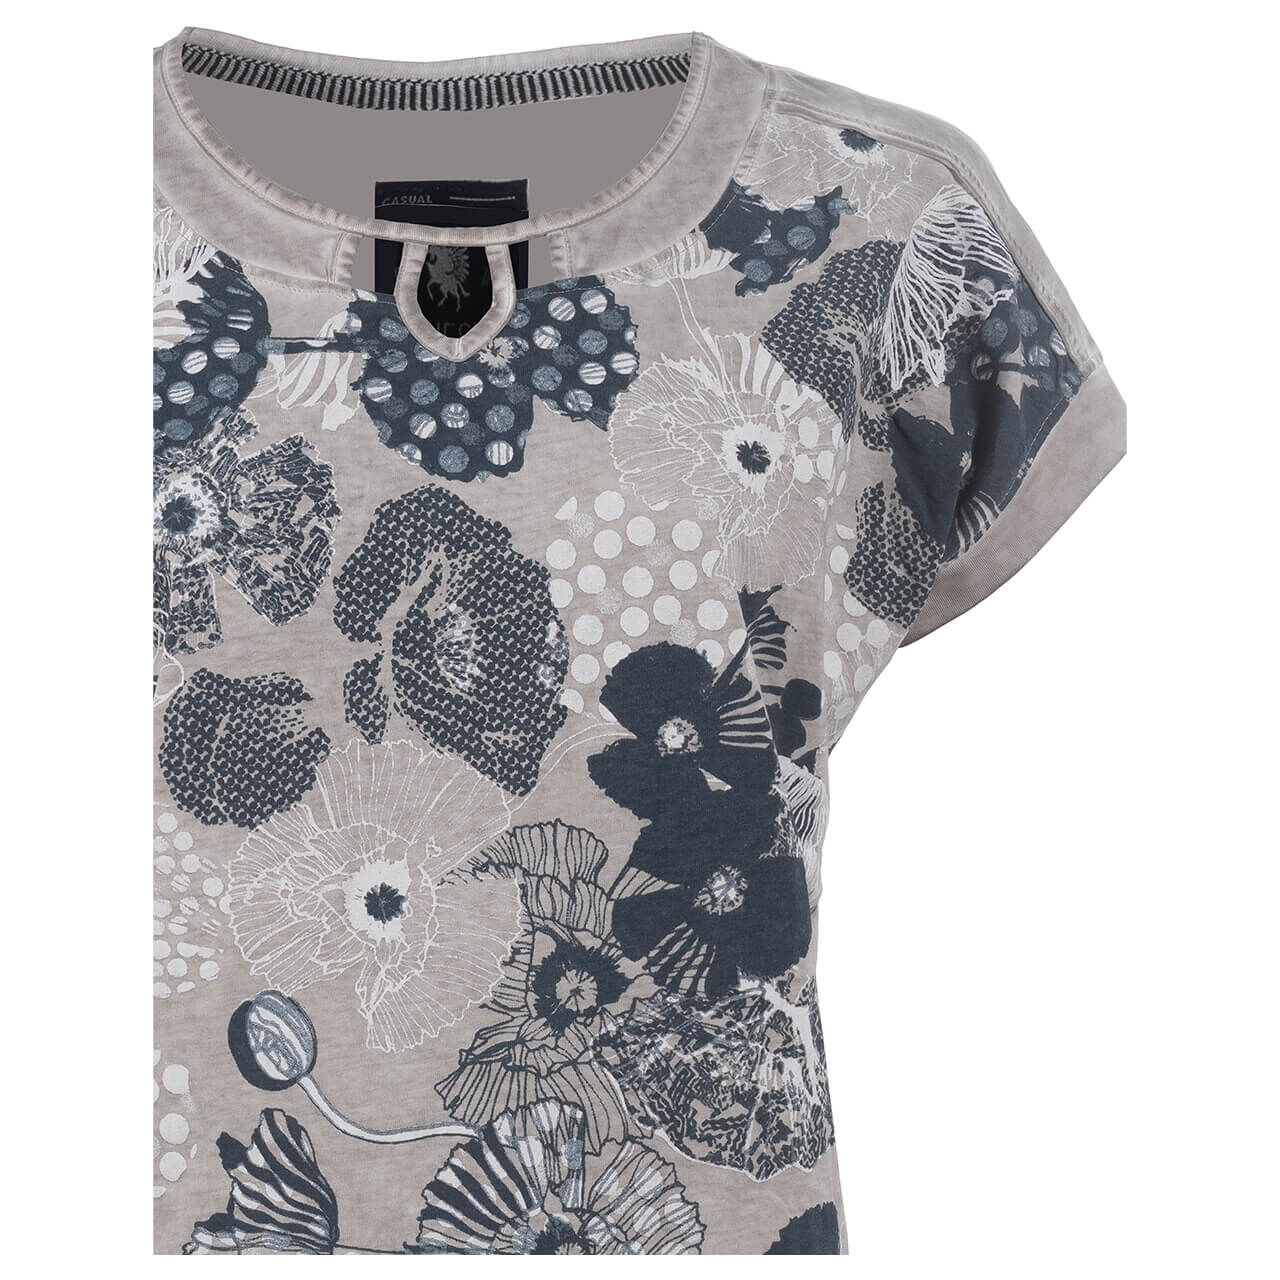 Soquesto Damen T-Shirt stone grey flowers